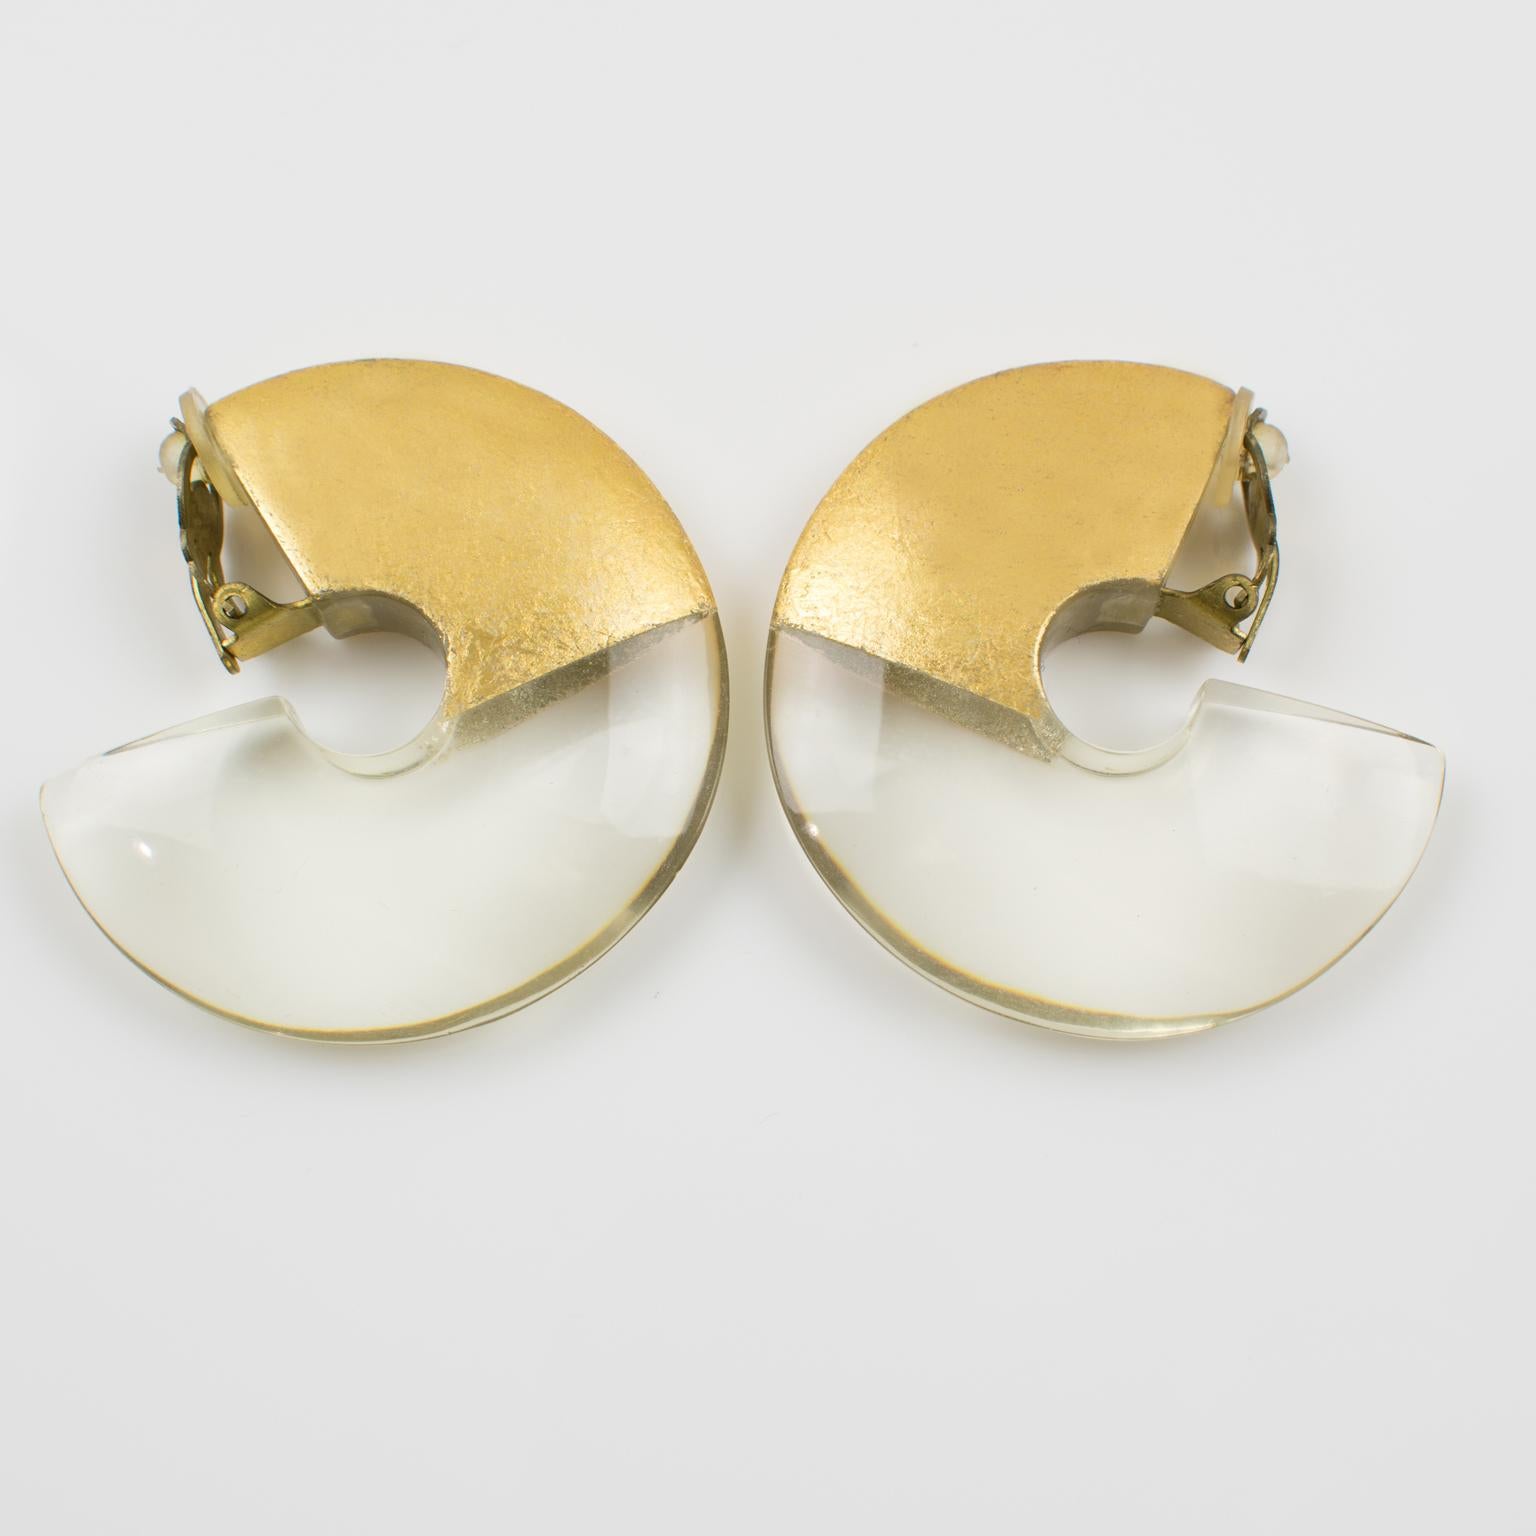 gold foil earrings